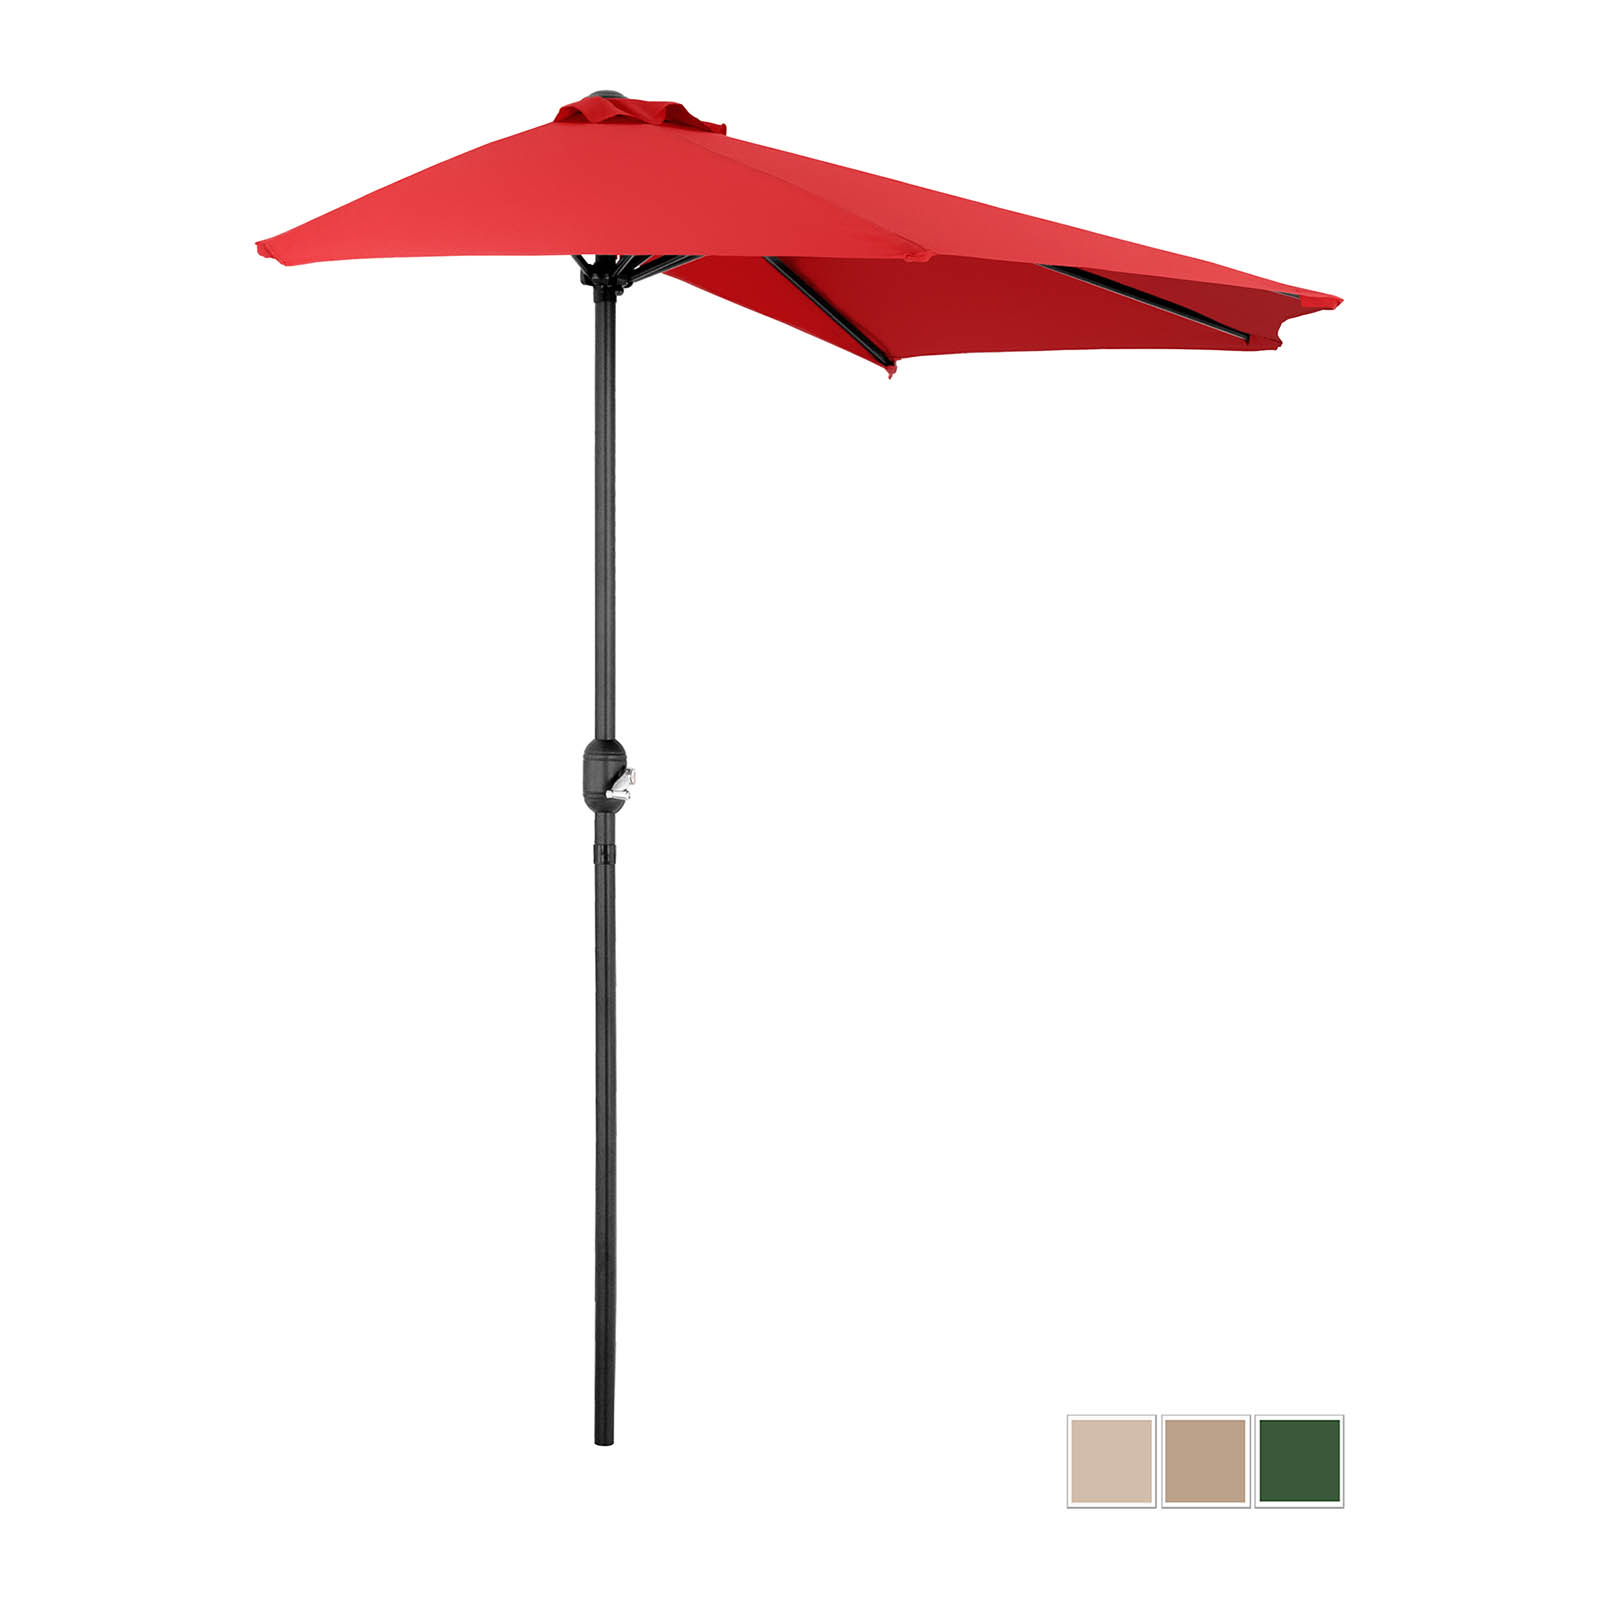 Halve parasol - Rood - vijfhoekig - 270 x 135 cm